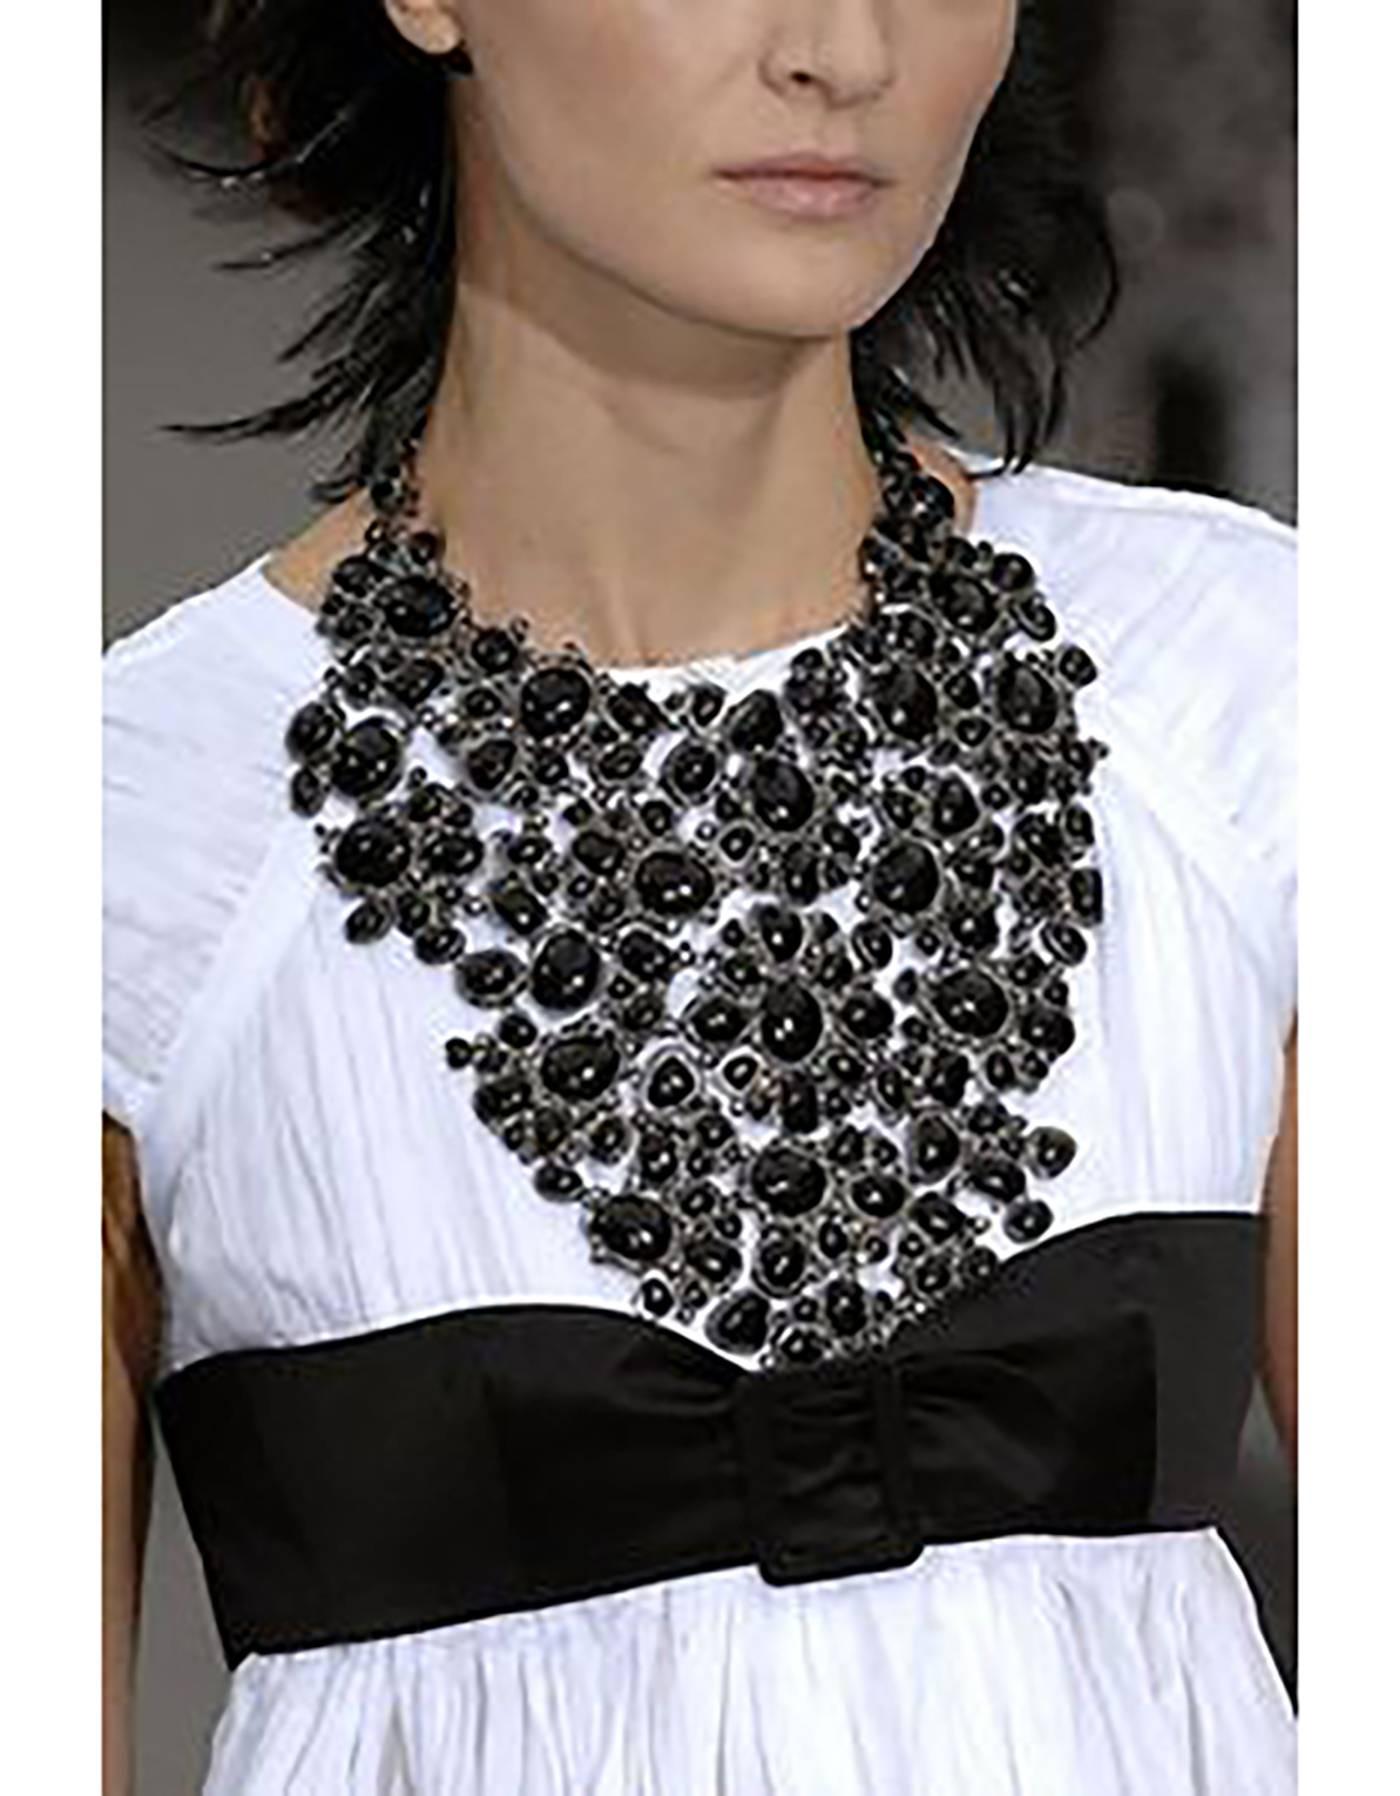 Chanel 2011 Runway Black & Grey Glass/Rhinestone Bib Necklace rt. $12k+ For Sale 1